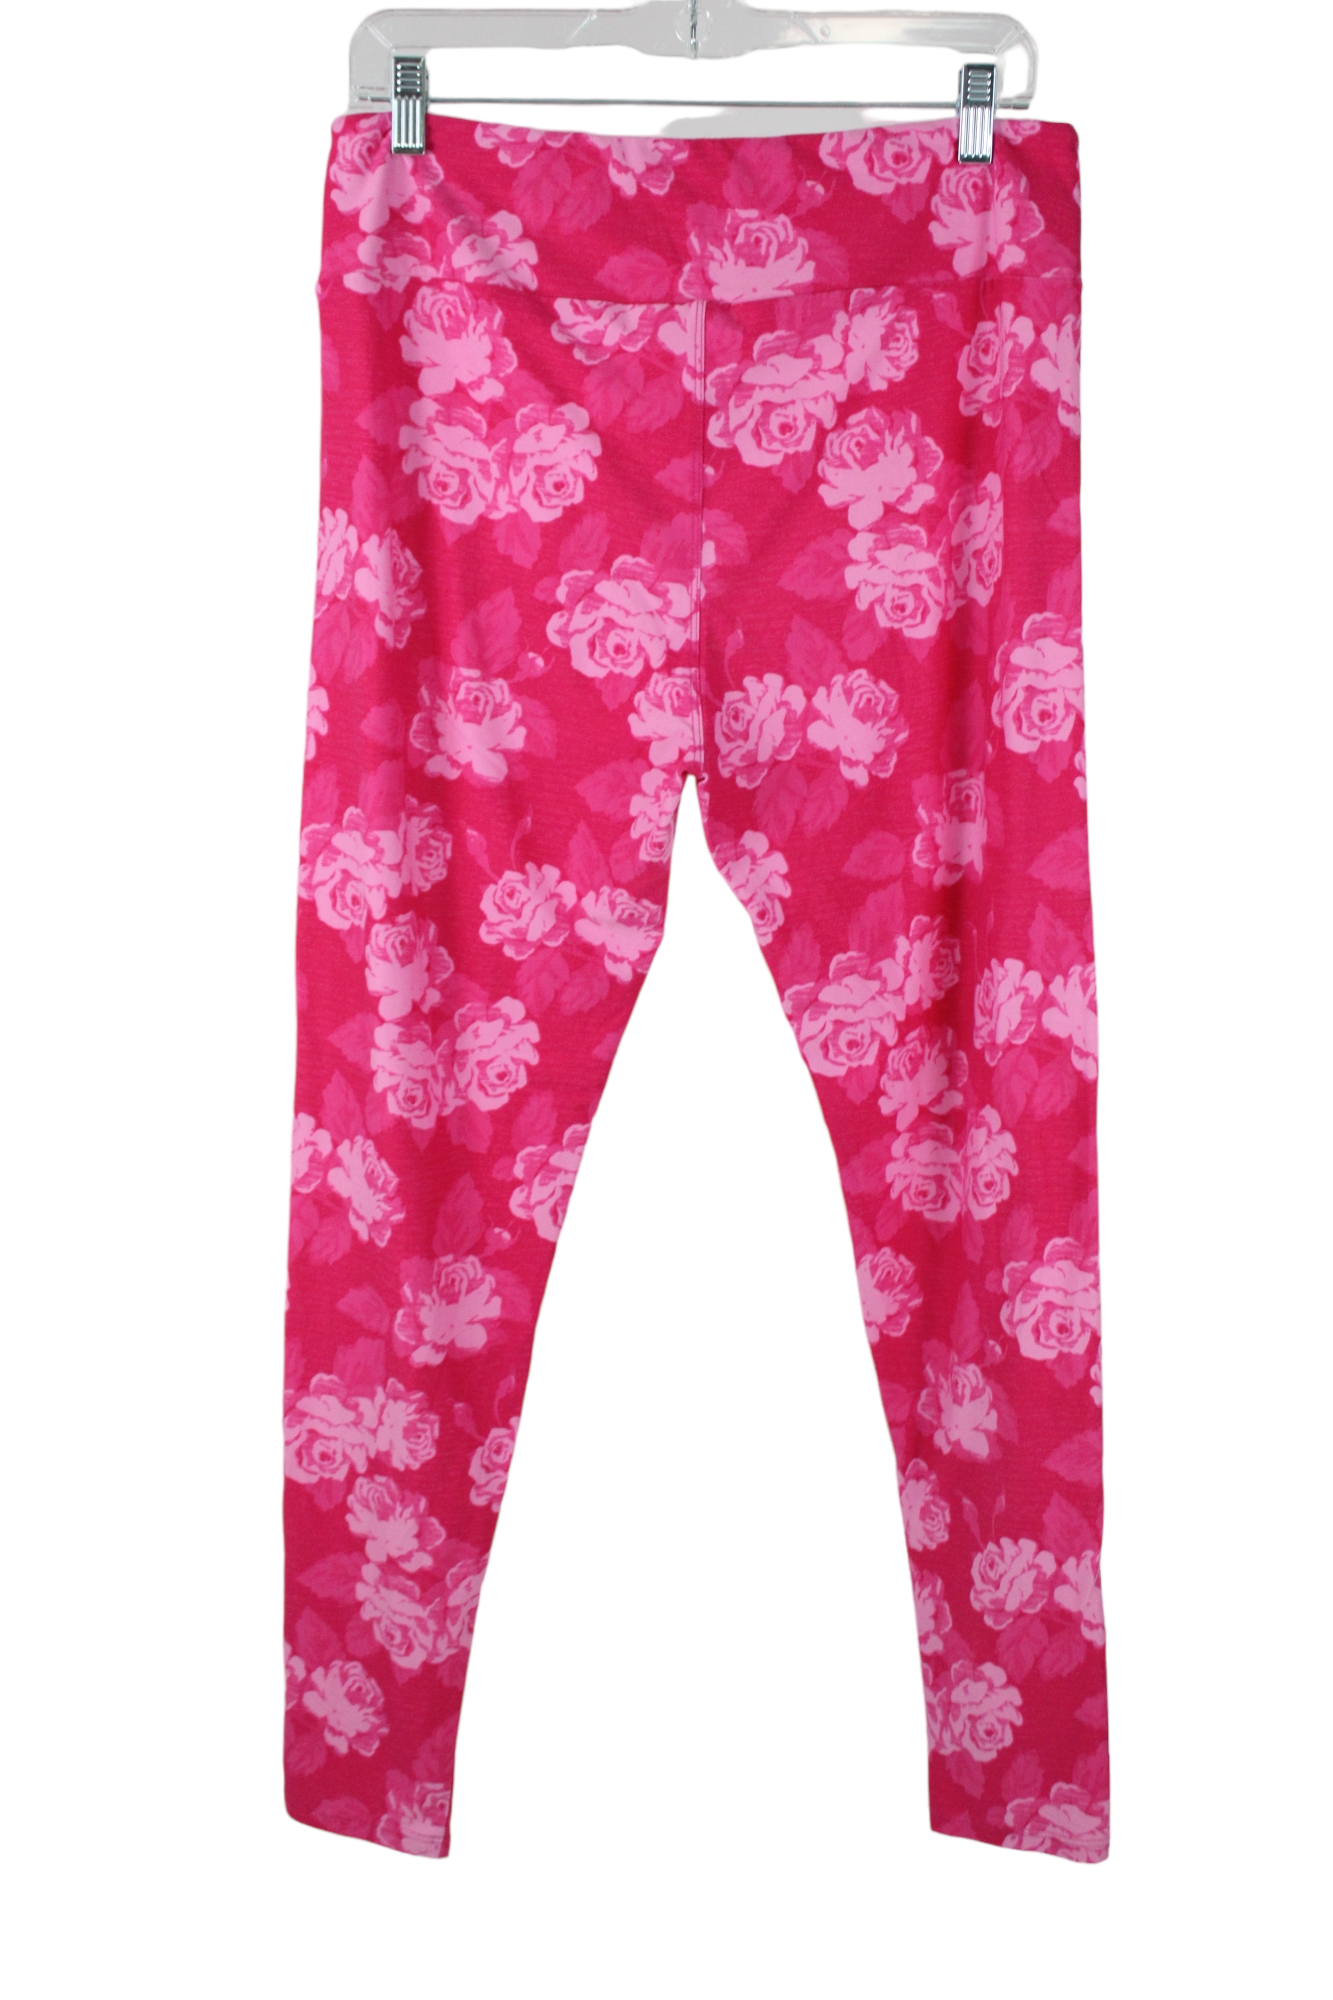 LuLaRoe Pink Roses Legging | Tall & Curvy